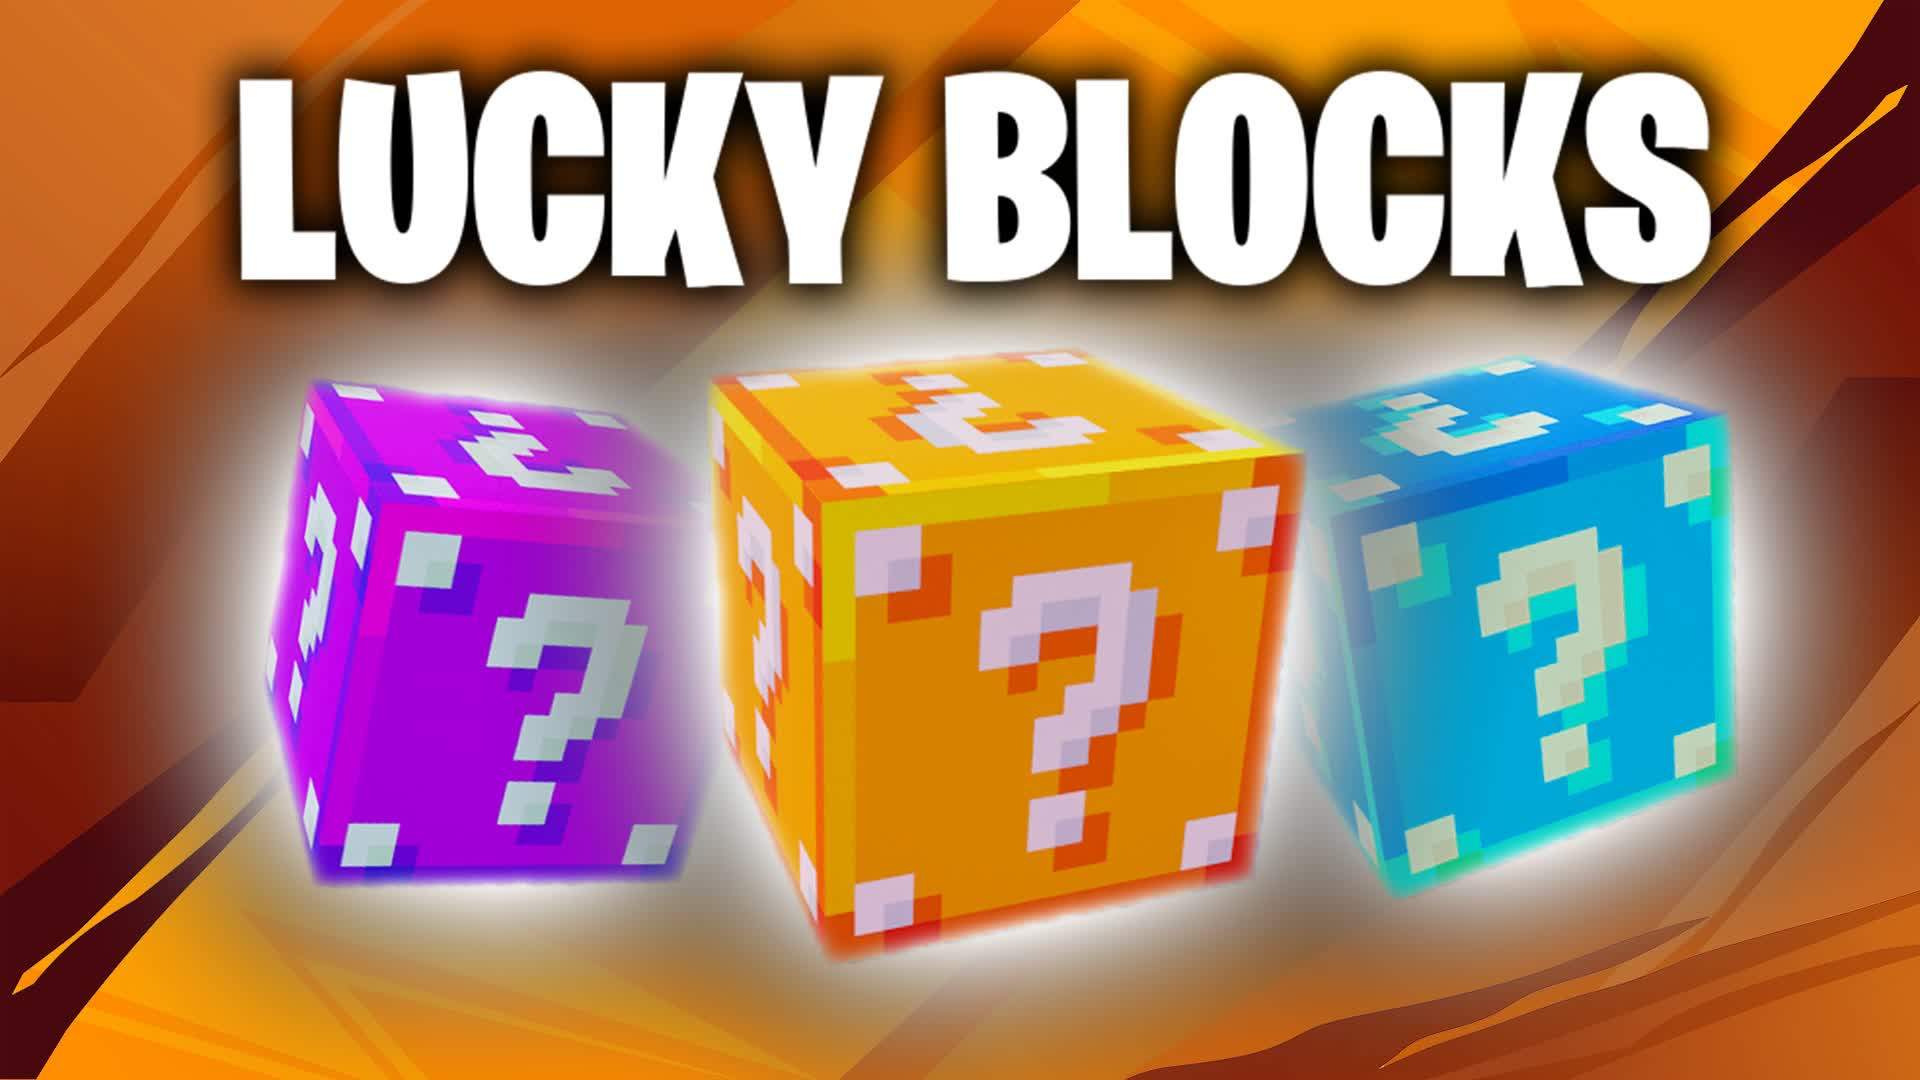 Lucky Block Battles - Fortnite Creative Map Code - Dropnite